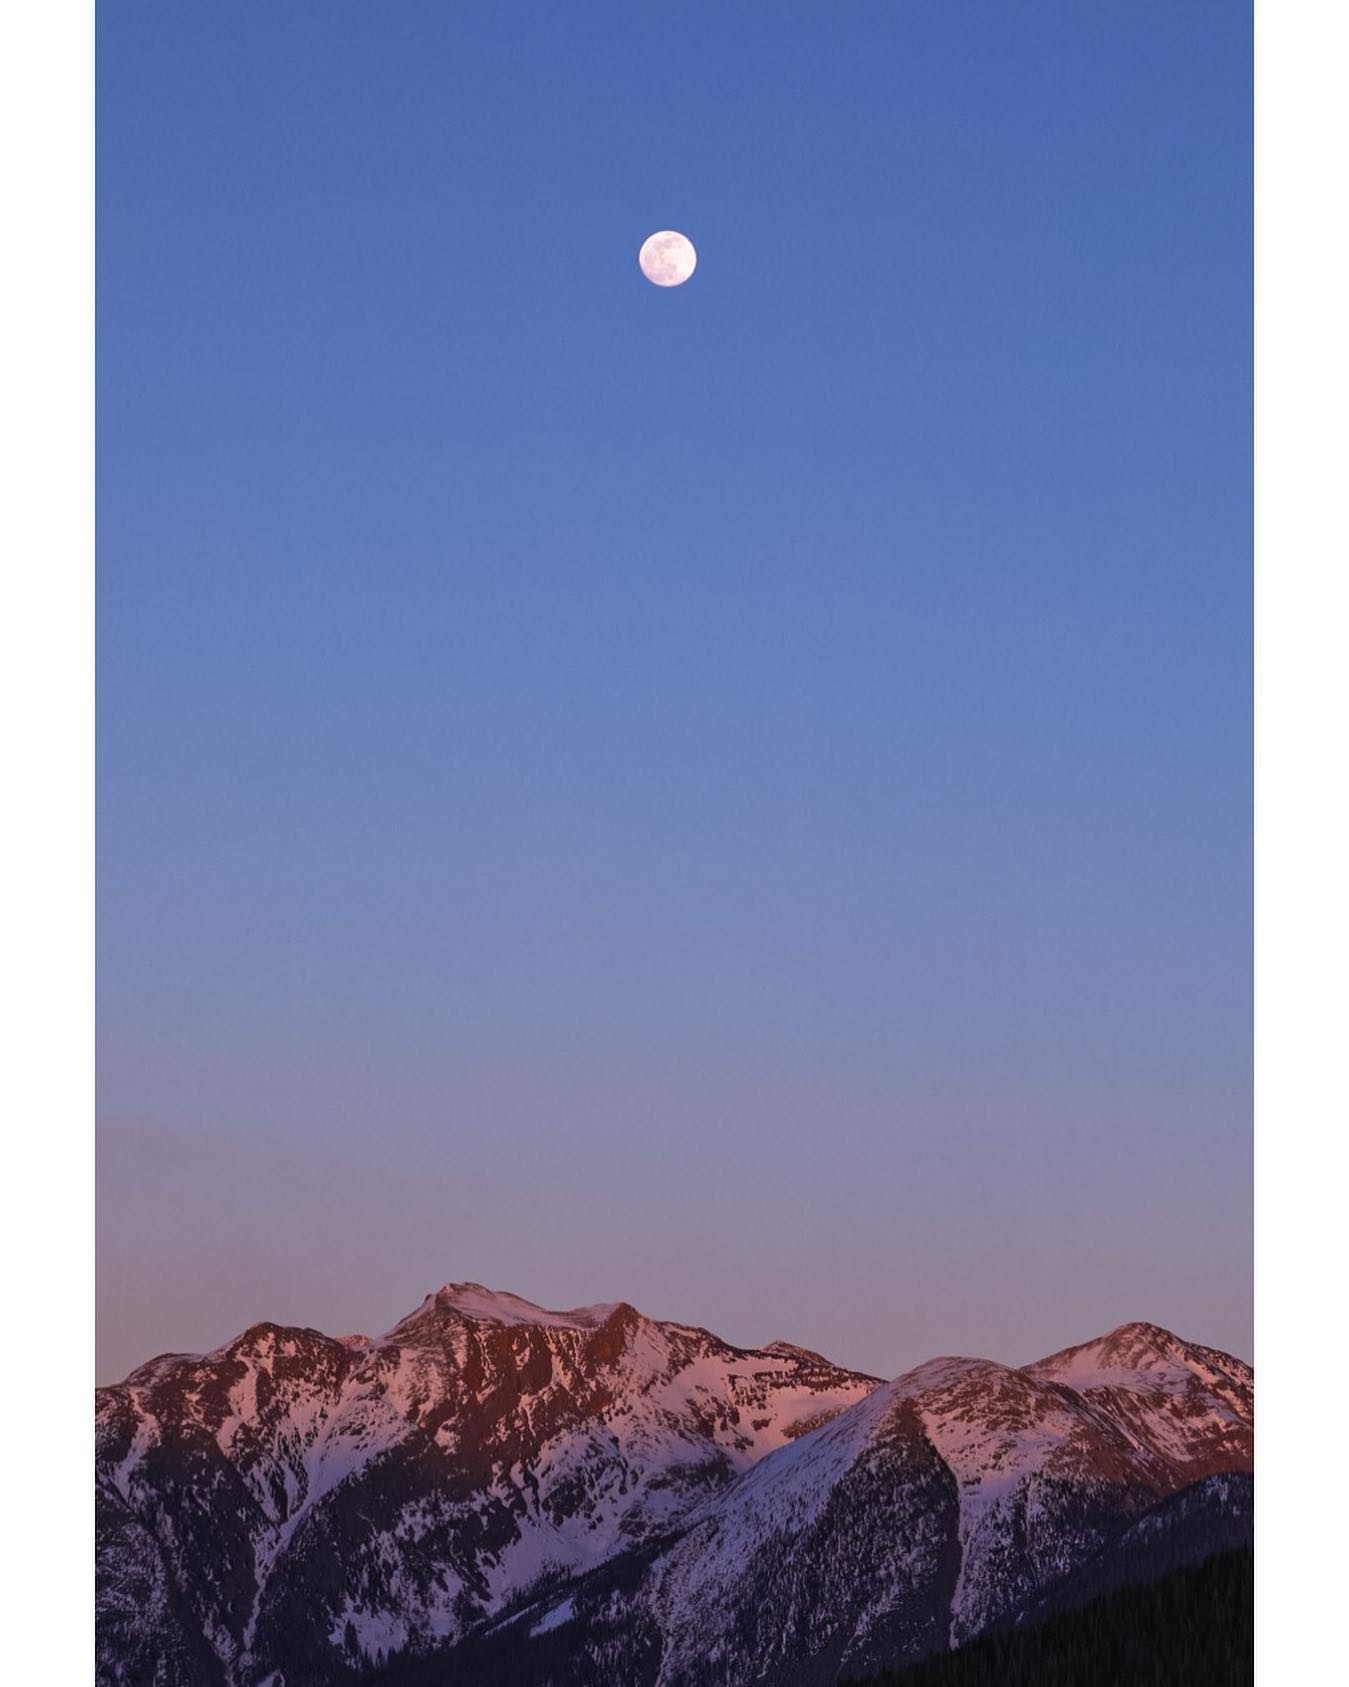 Tomorrow’s super moon 🌙 made for one heck of an alpen glow show tonight ✨
-
#visitdurango #durangocolorado #durango #molaspass #alpenglow #supermoon #fullpinkmoon #coloRADo #visitcolorado #coloradoalpenglow #sunsetlovers